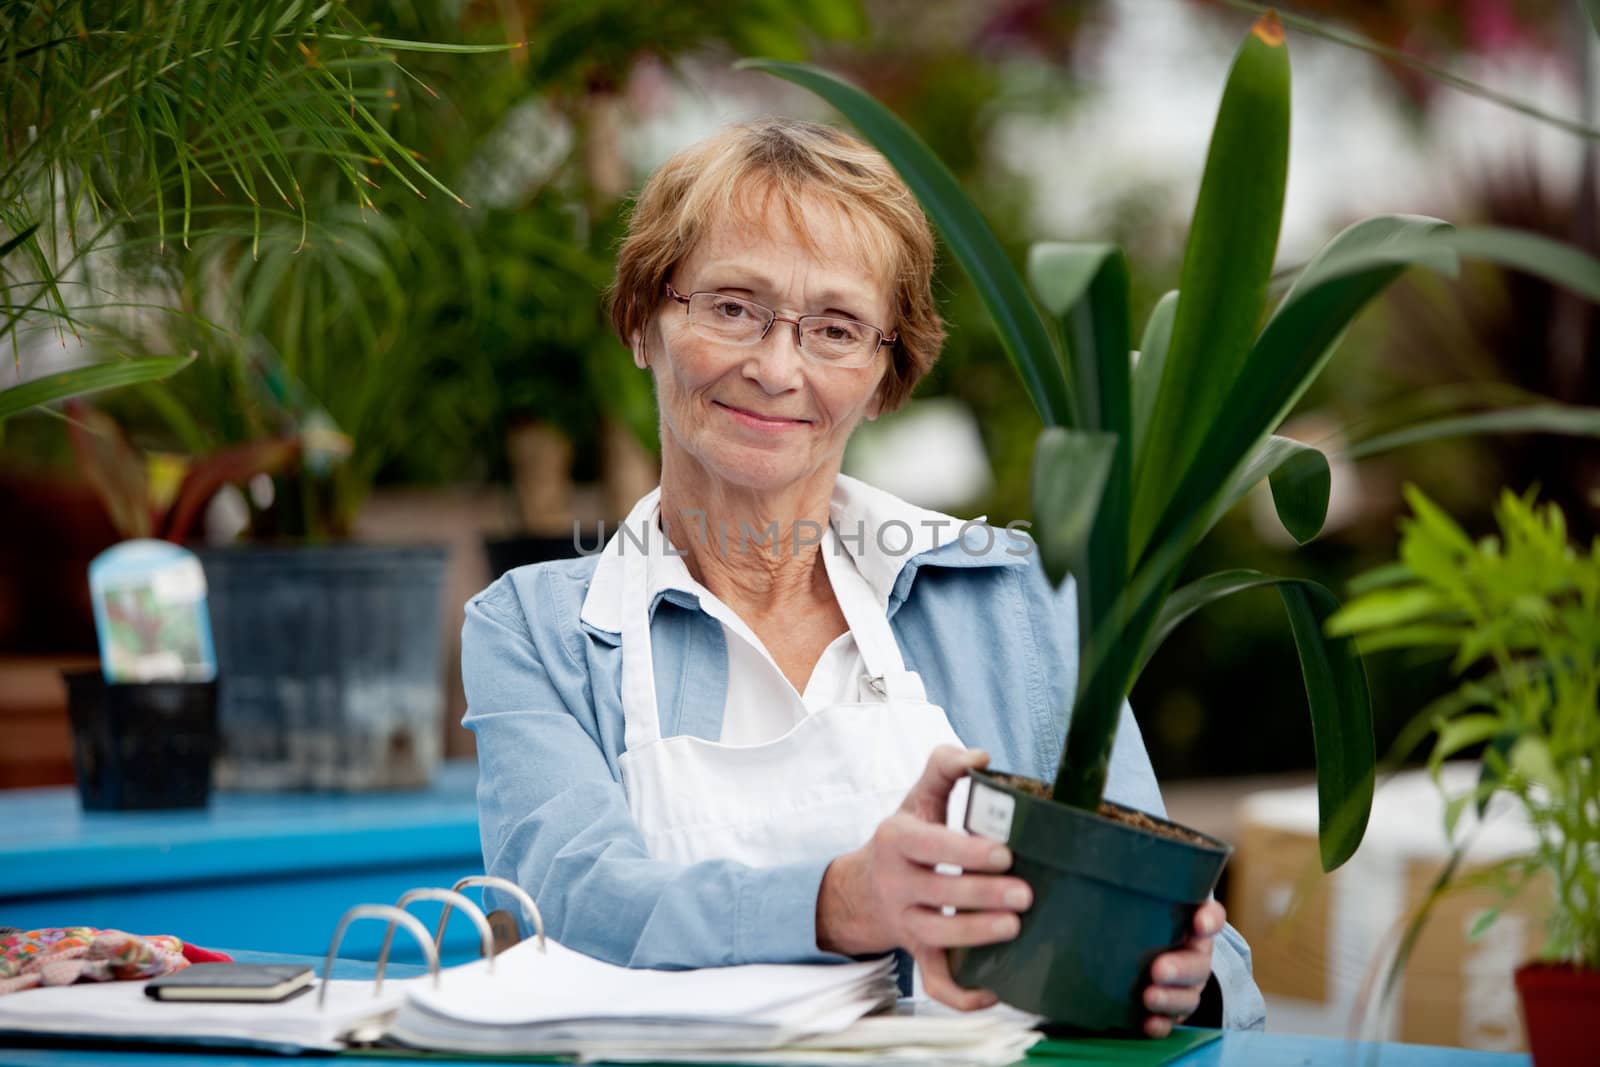 Portrait of a senior woman working in a garden center